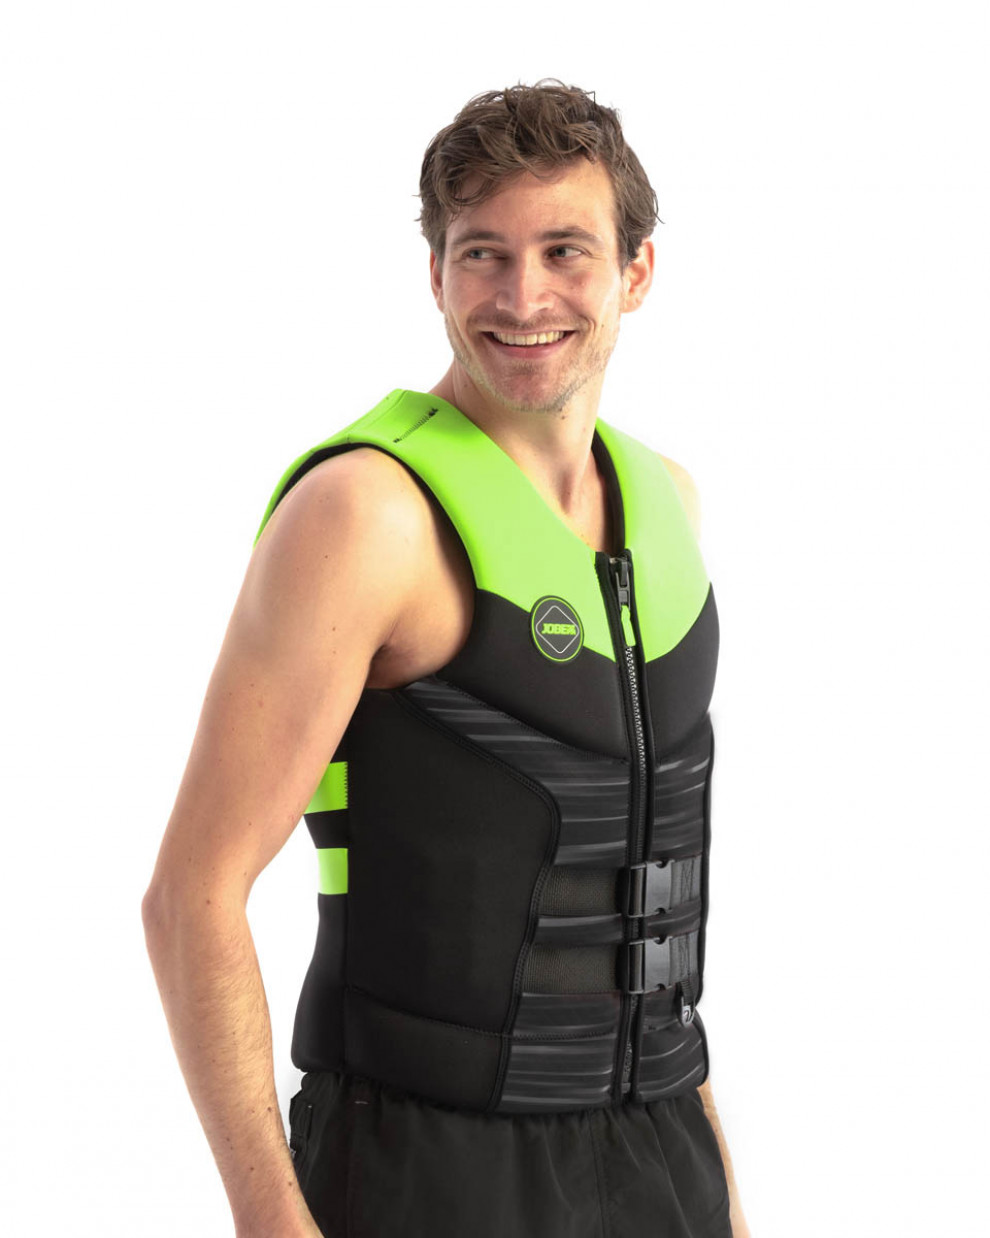 Ūdenssporta veste-peldveste vīriešu Jobe Segmented Jet Backsupport, laima zaļa-melna